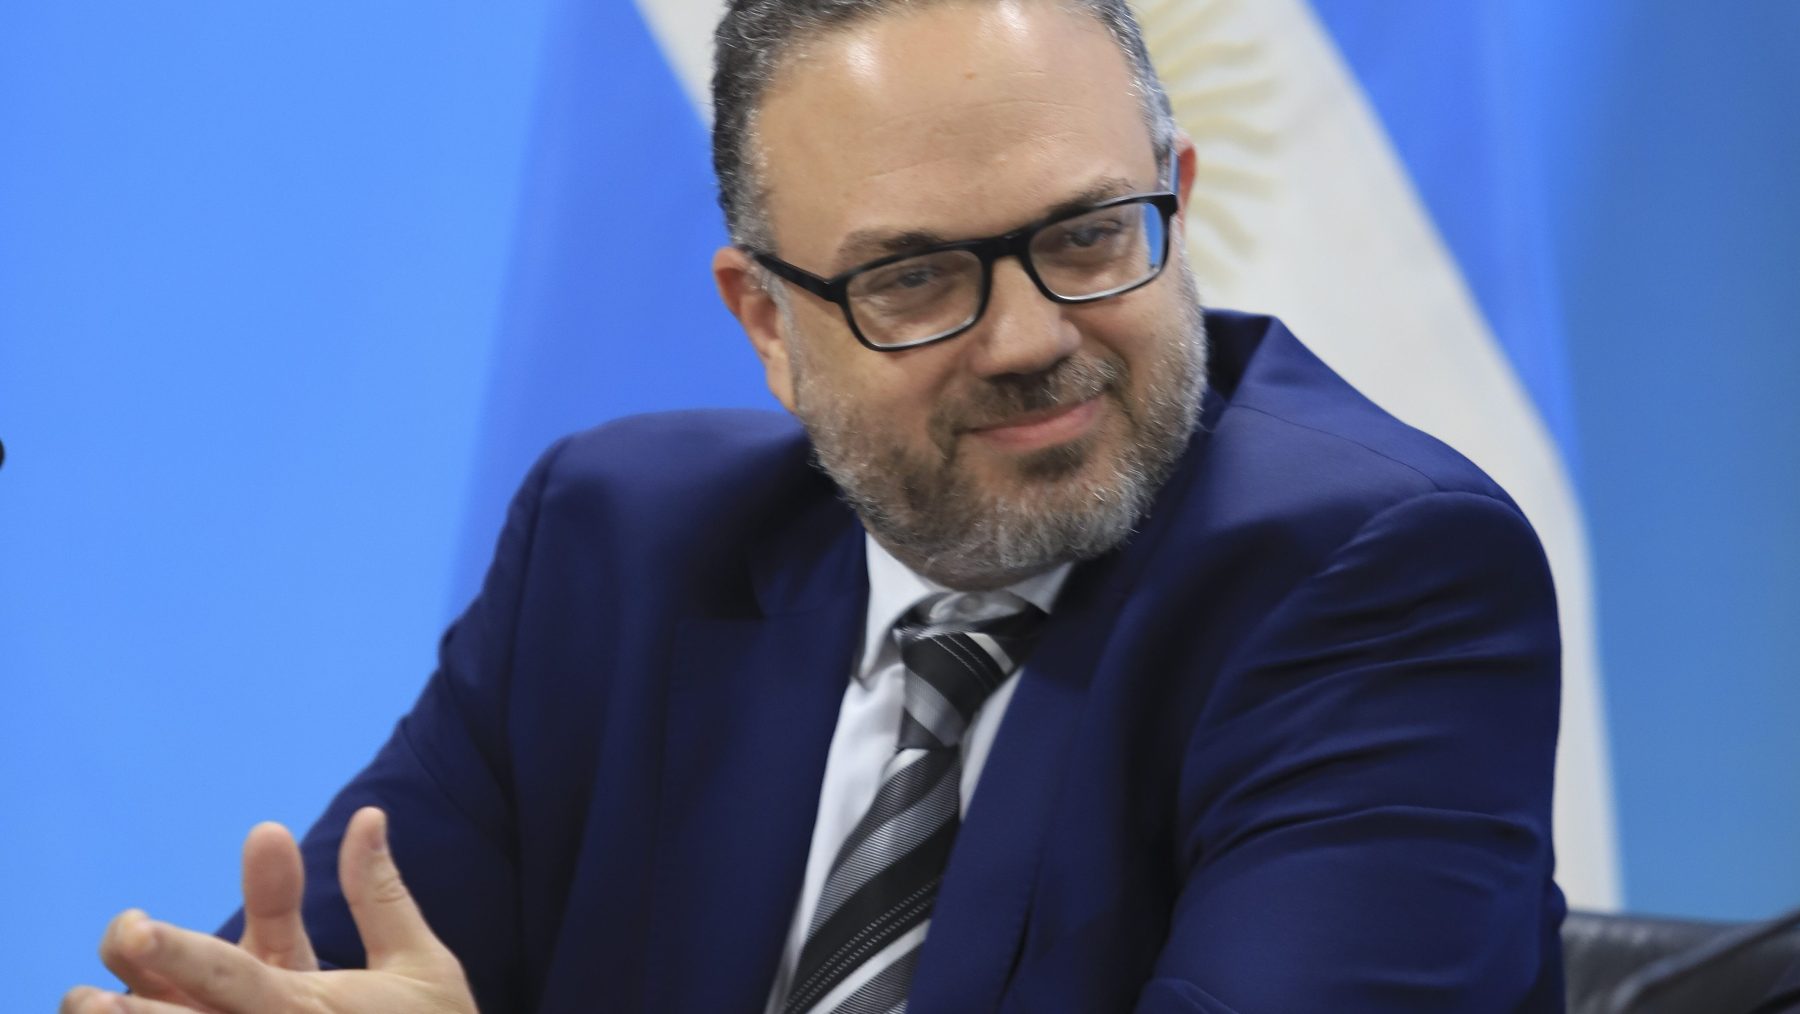 Matías Kulfas, Argentina's Minister of Productive Development,